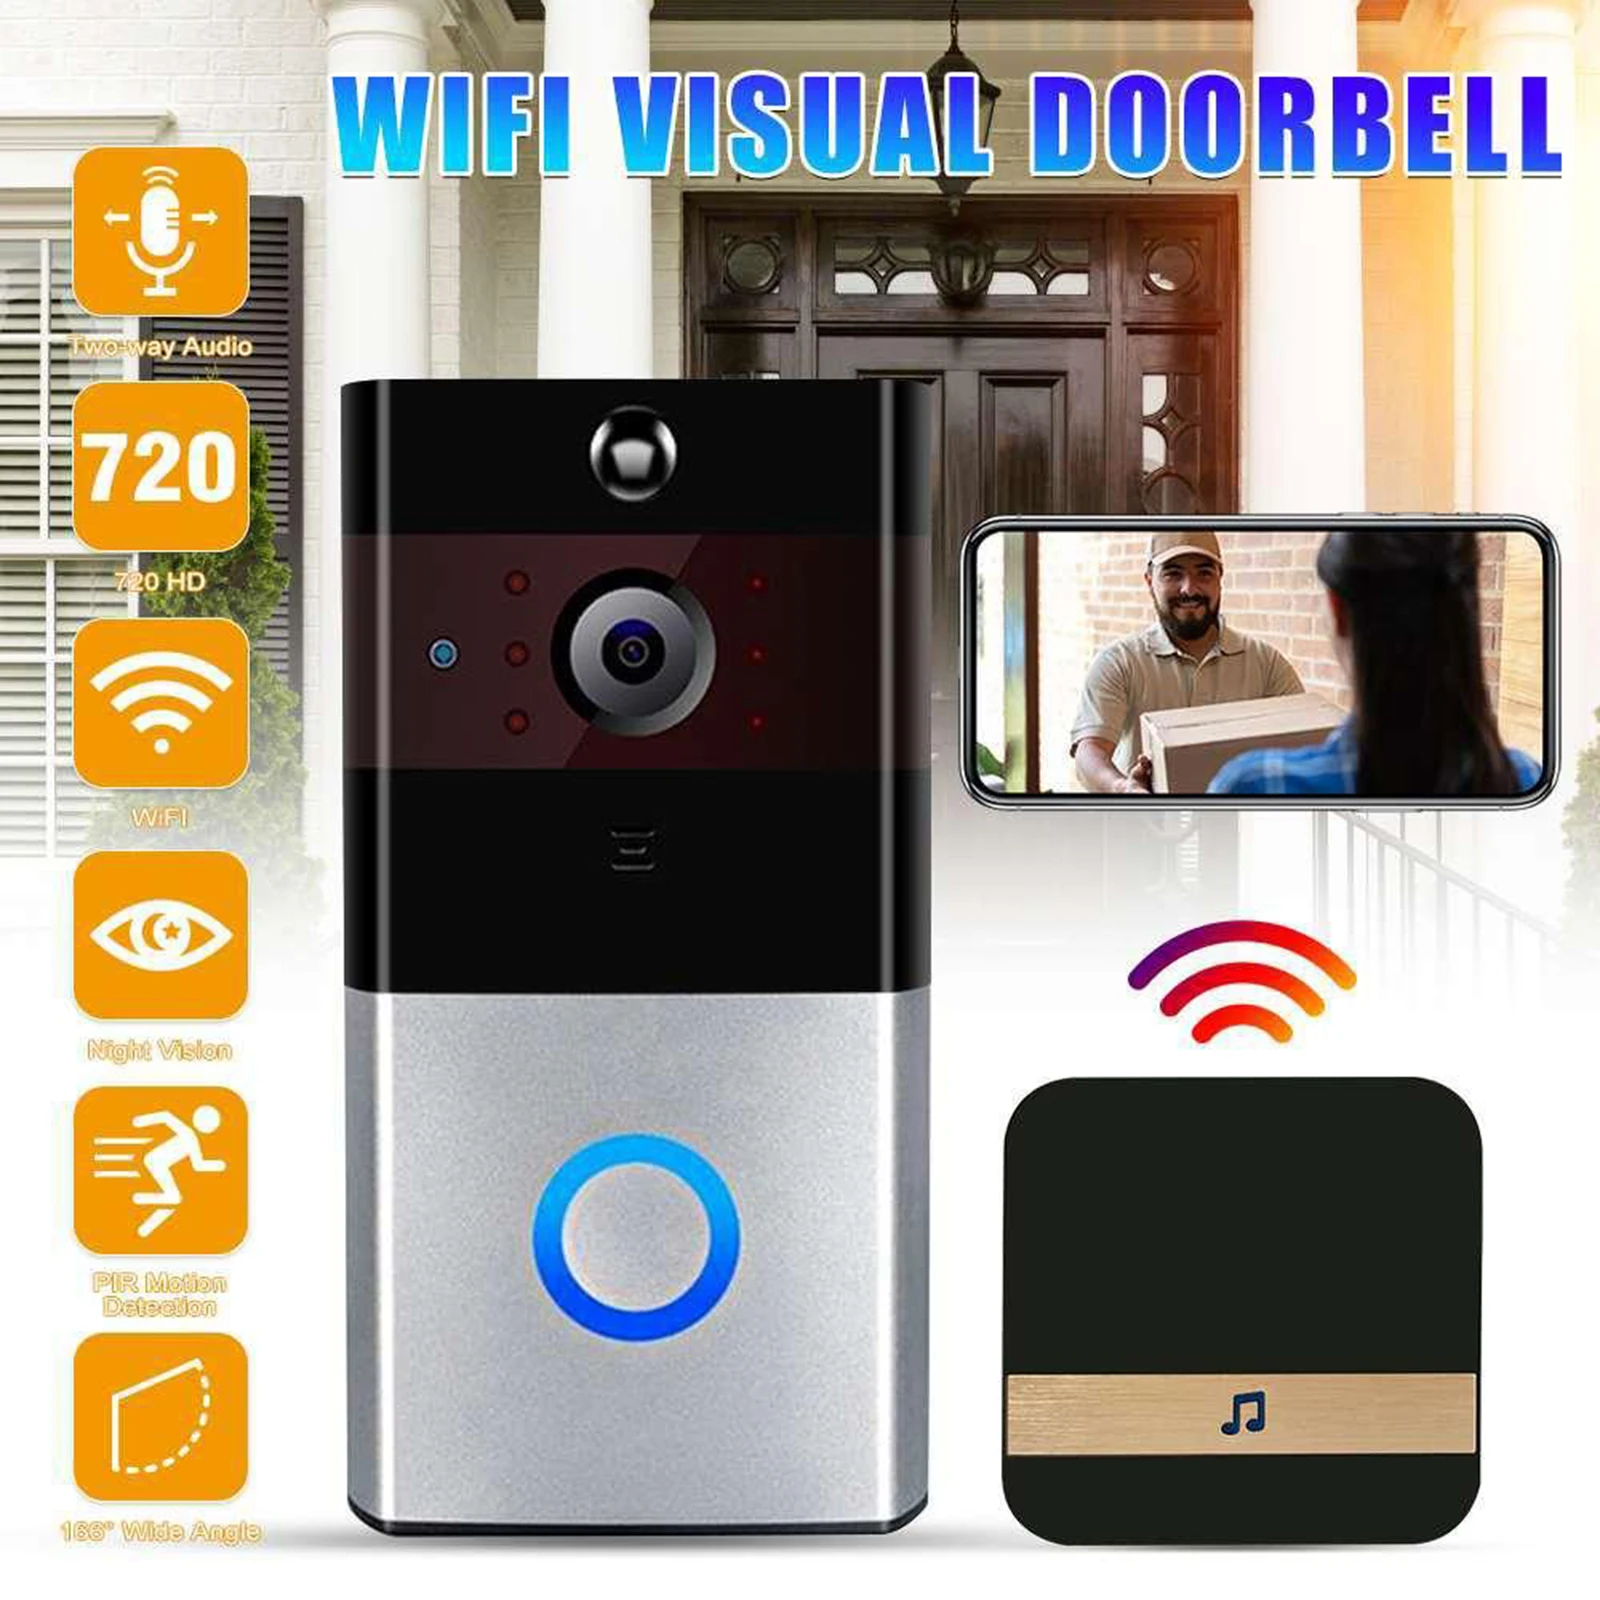 WiFi Ring Doorbell Smart Wireless Bell Camera Video Phone Intercom Home Security